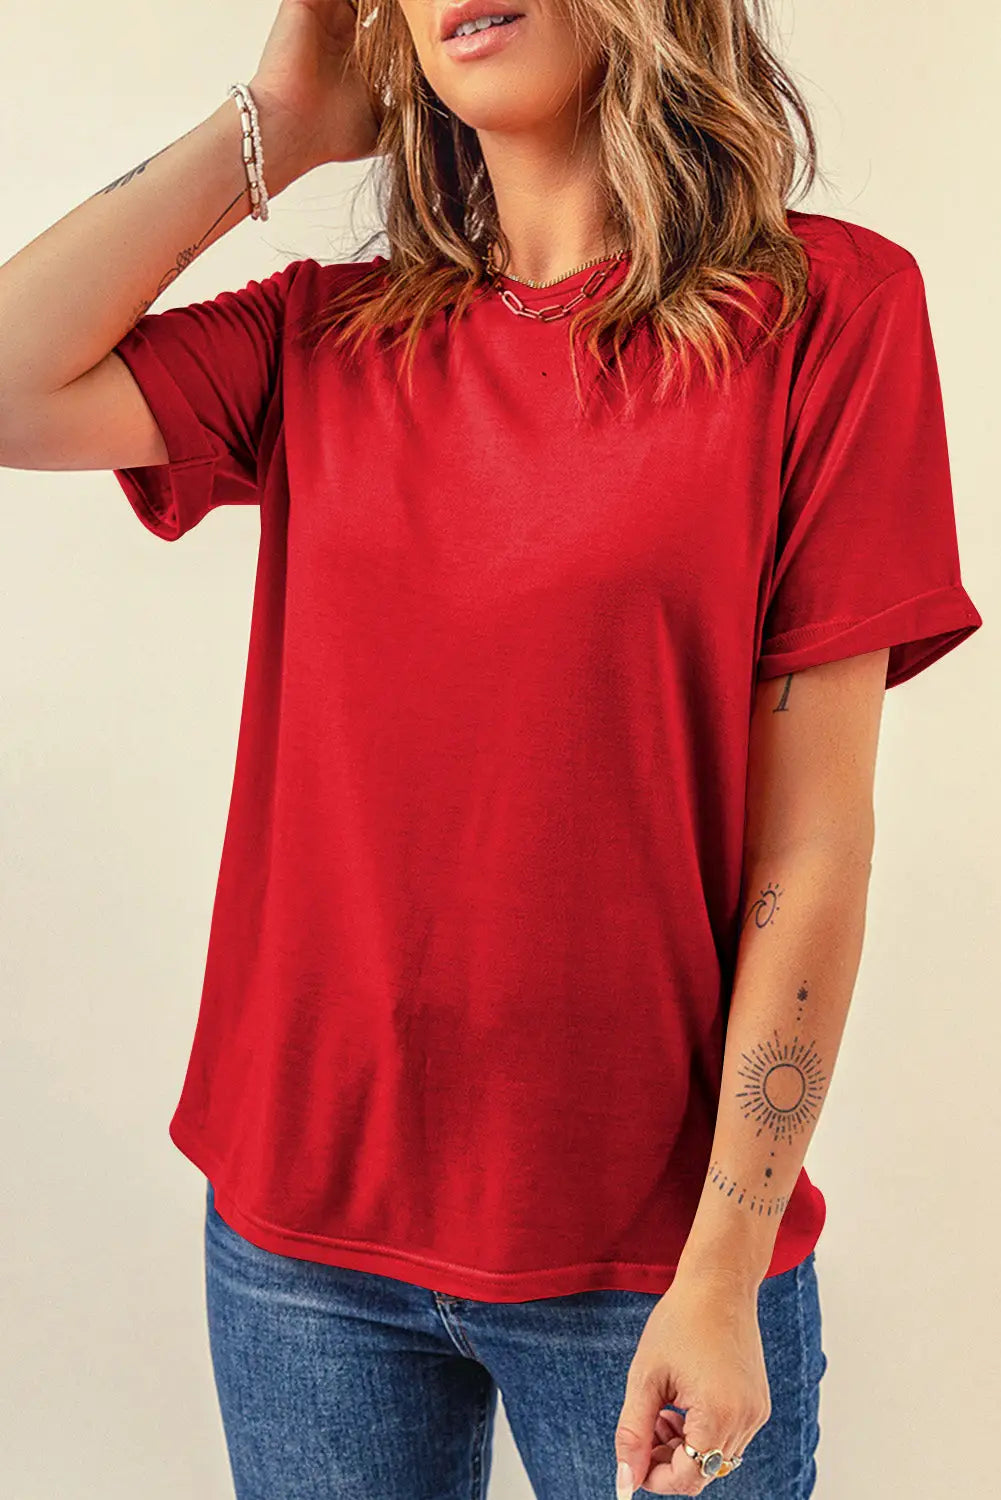 Khaki casual plain crew neck tee - red-2 / s / 62% polyester + 32% cotton + 6% elastane - t-shirts